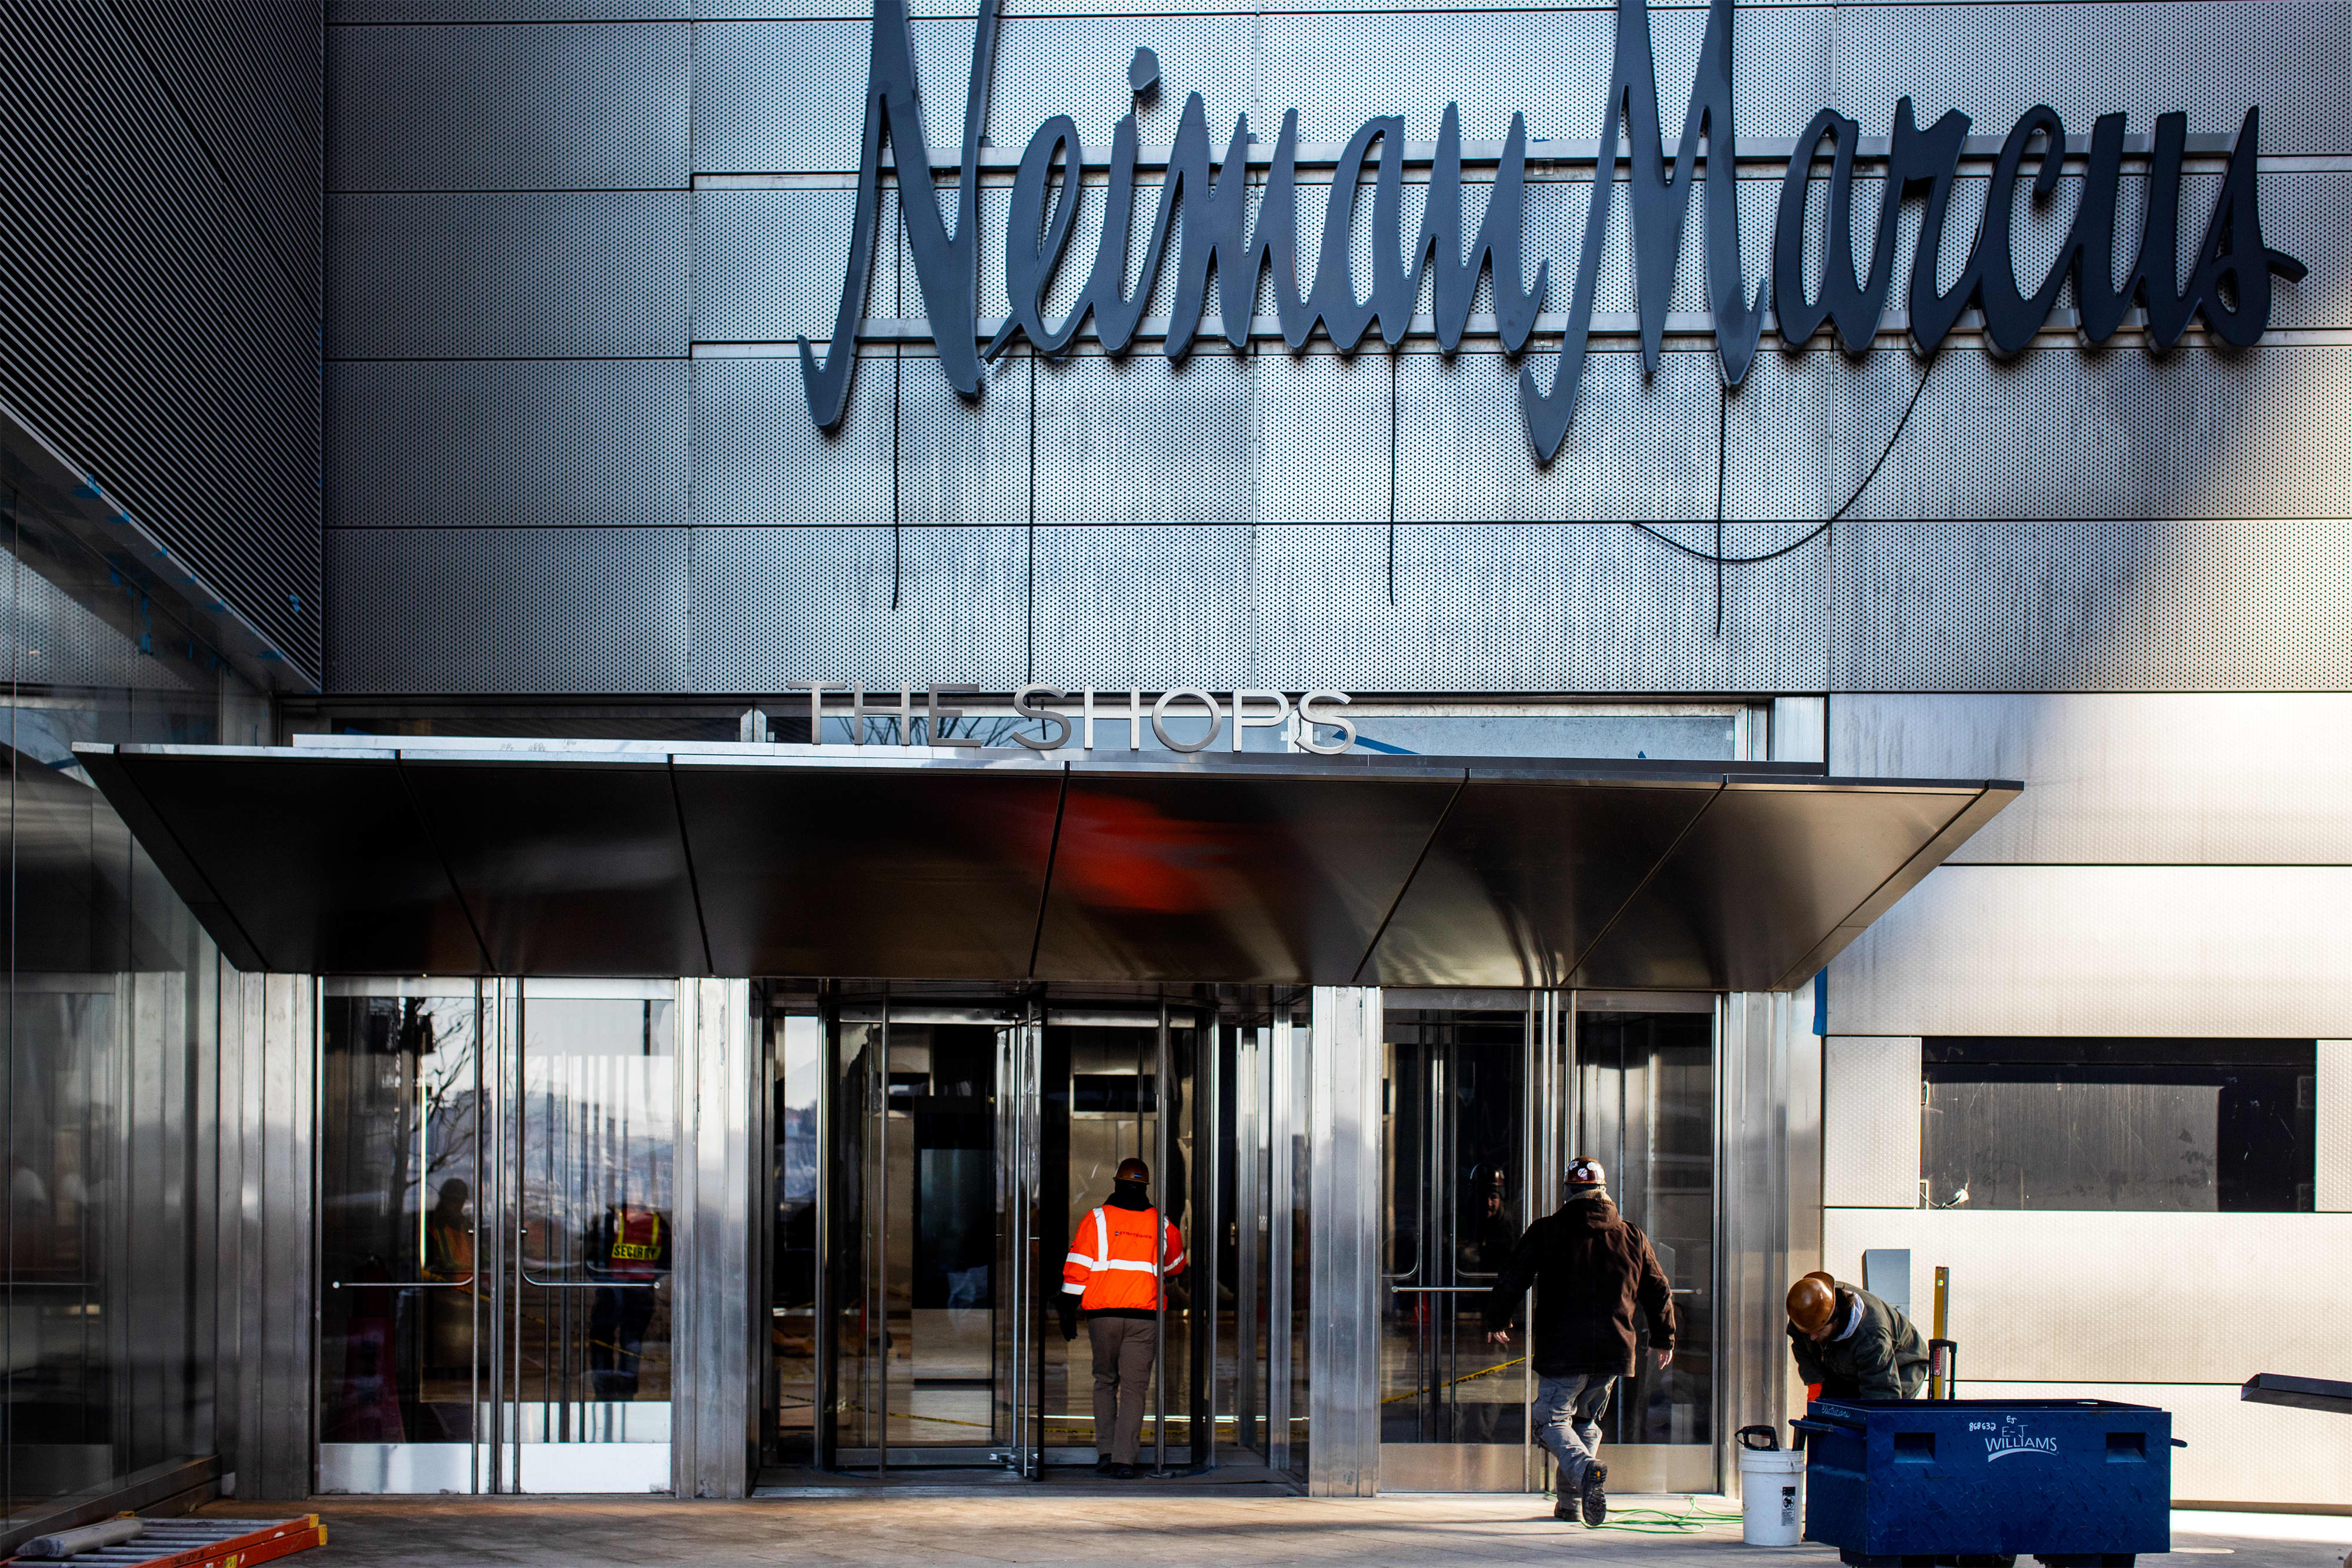 Neiman Marcus Encounters Hurdles in Bankruptcy – WWD